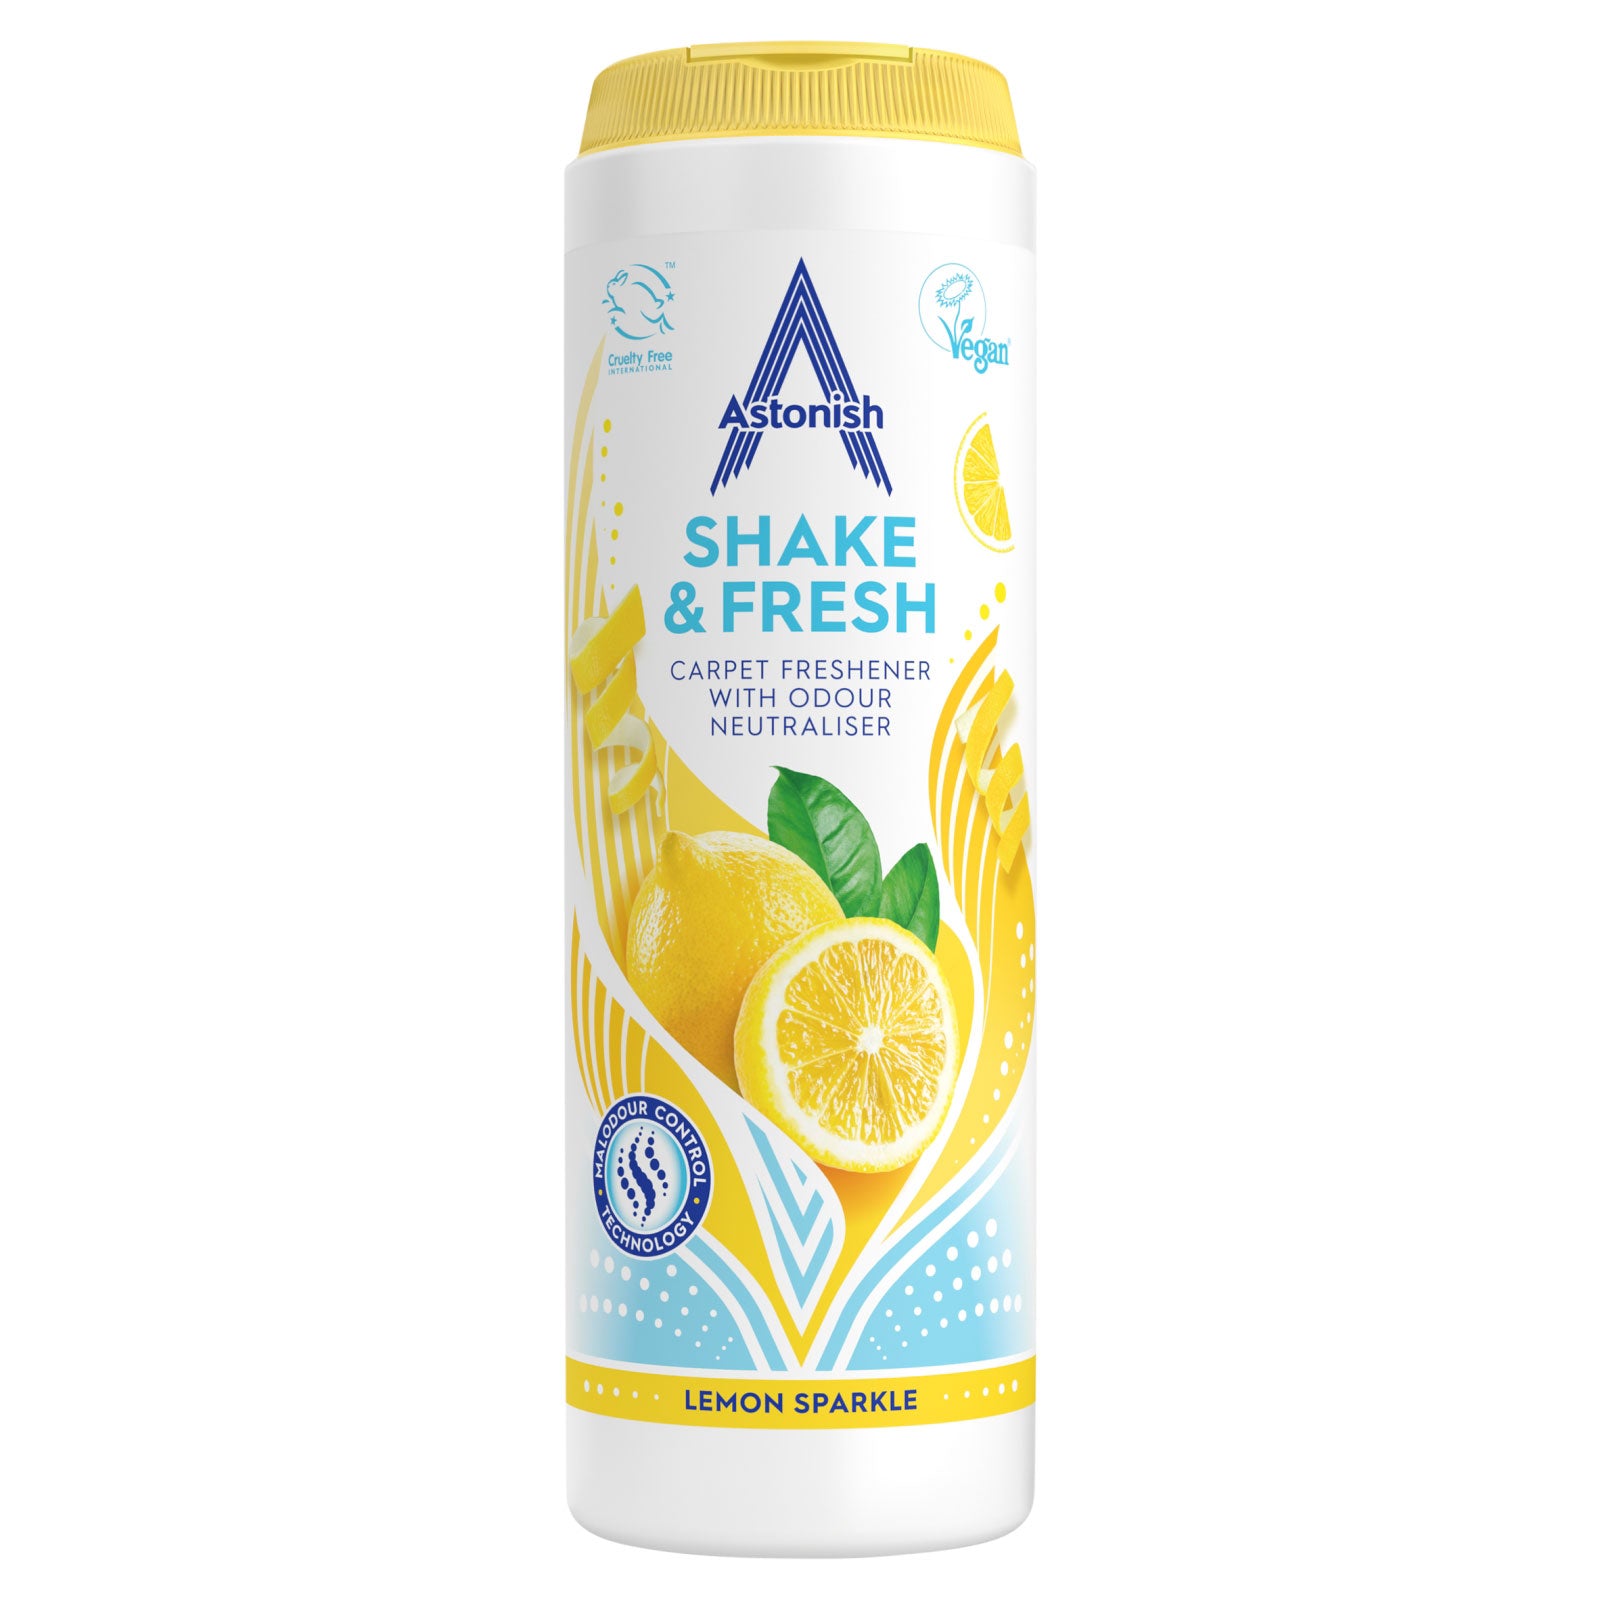 Astonish Shake & Fresh Lemon Sparkle Carpet Freshener 350g